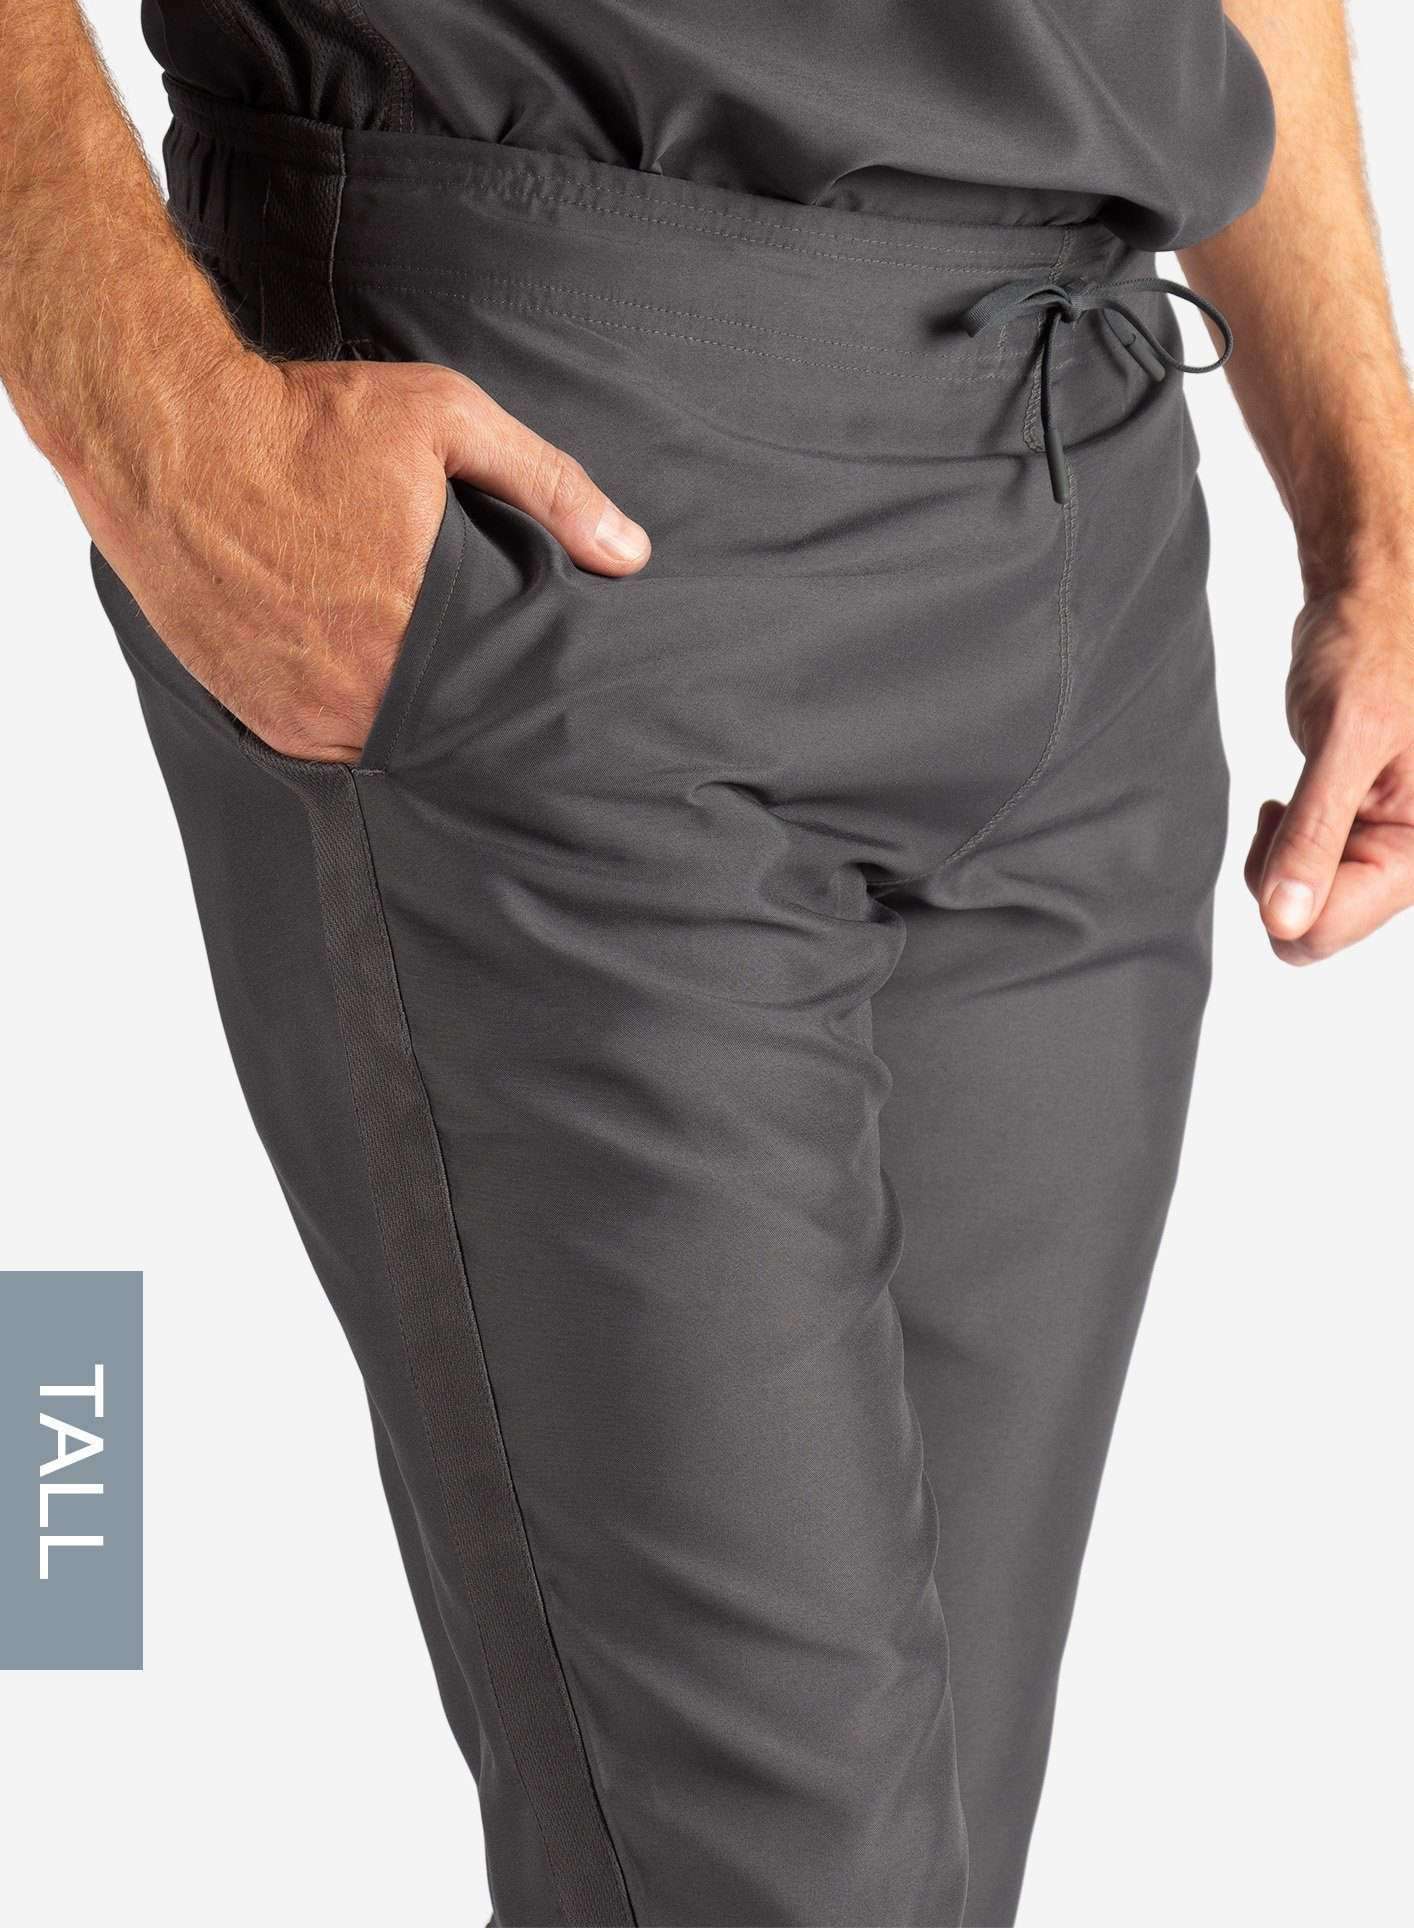 Men&#39;s Tall Slim Fit Scrub Pants in Dark gray Waistband View